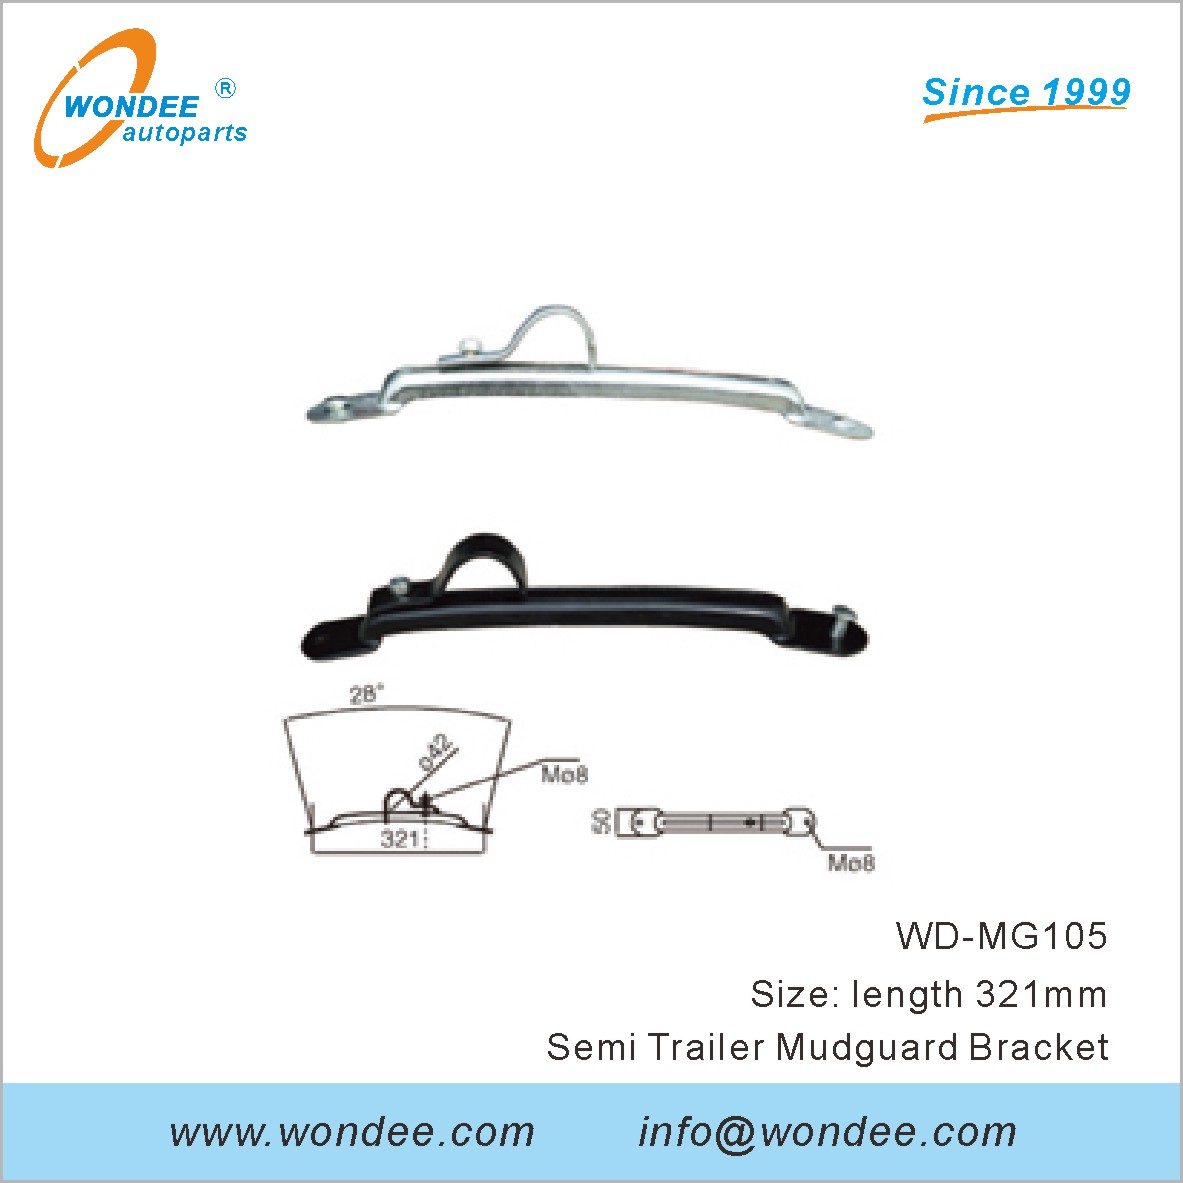 Mudguard bracket from WONDEE Autoparts (5)